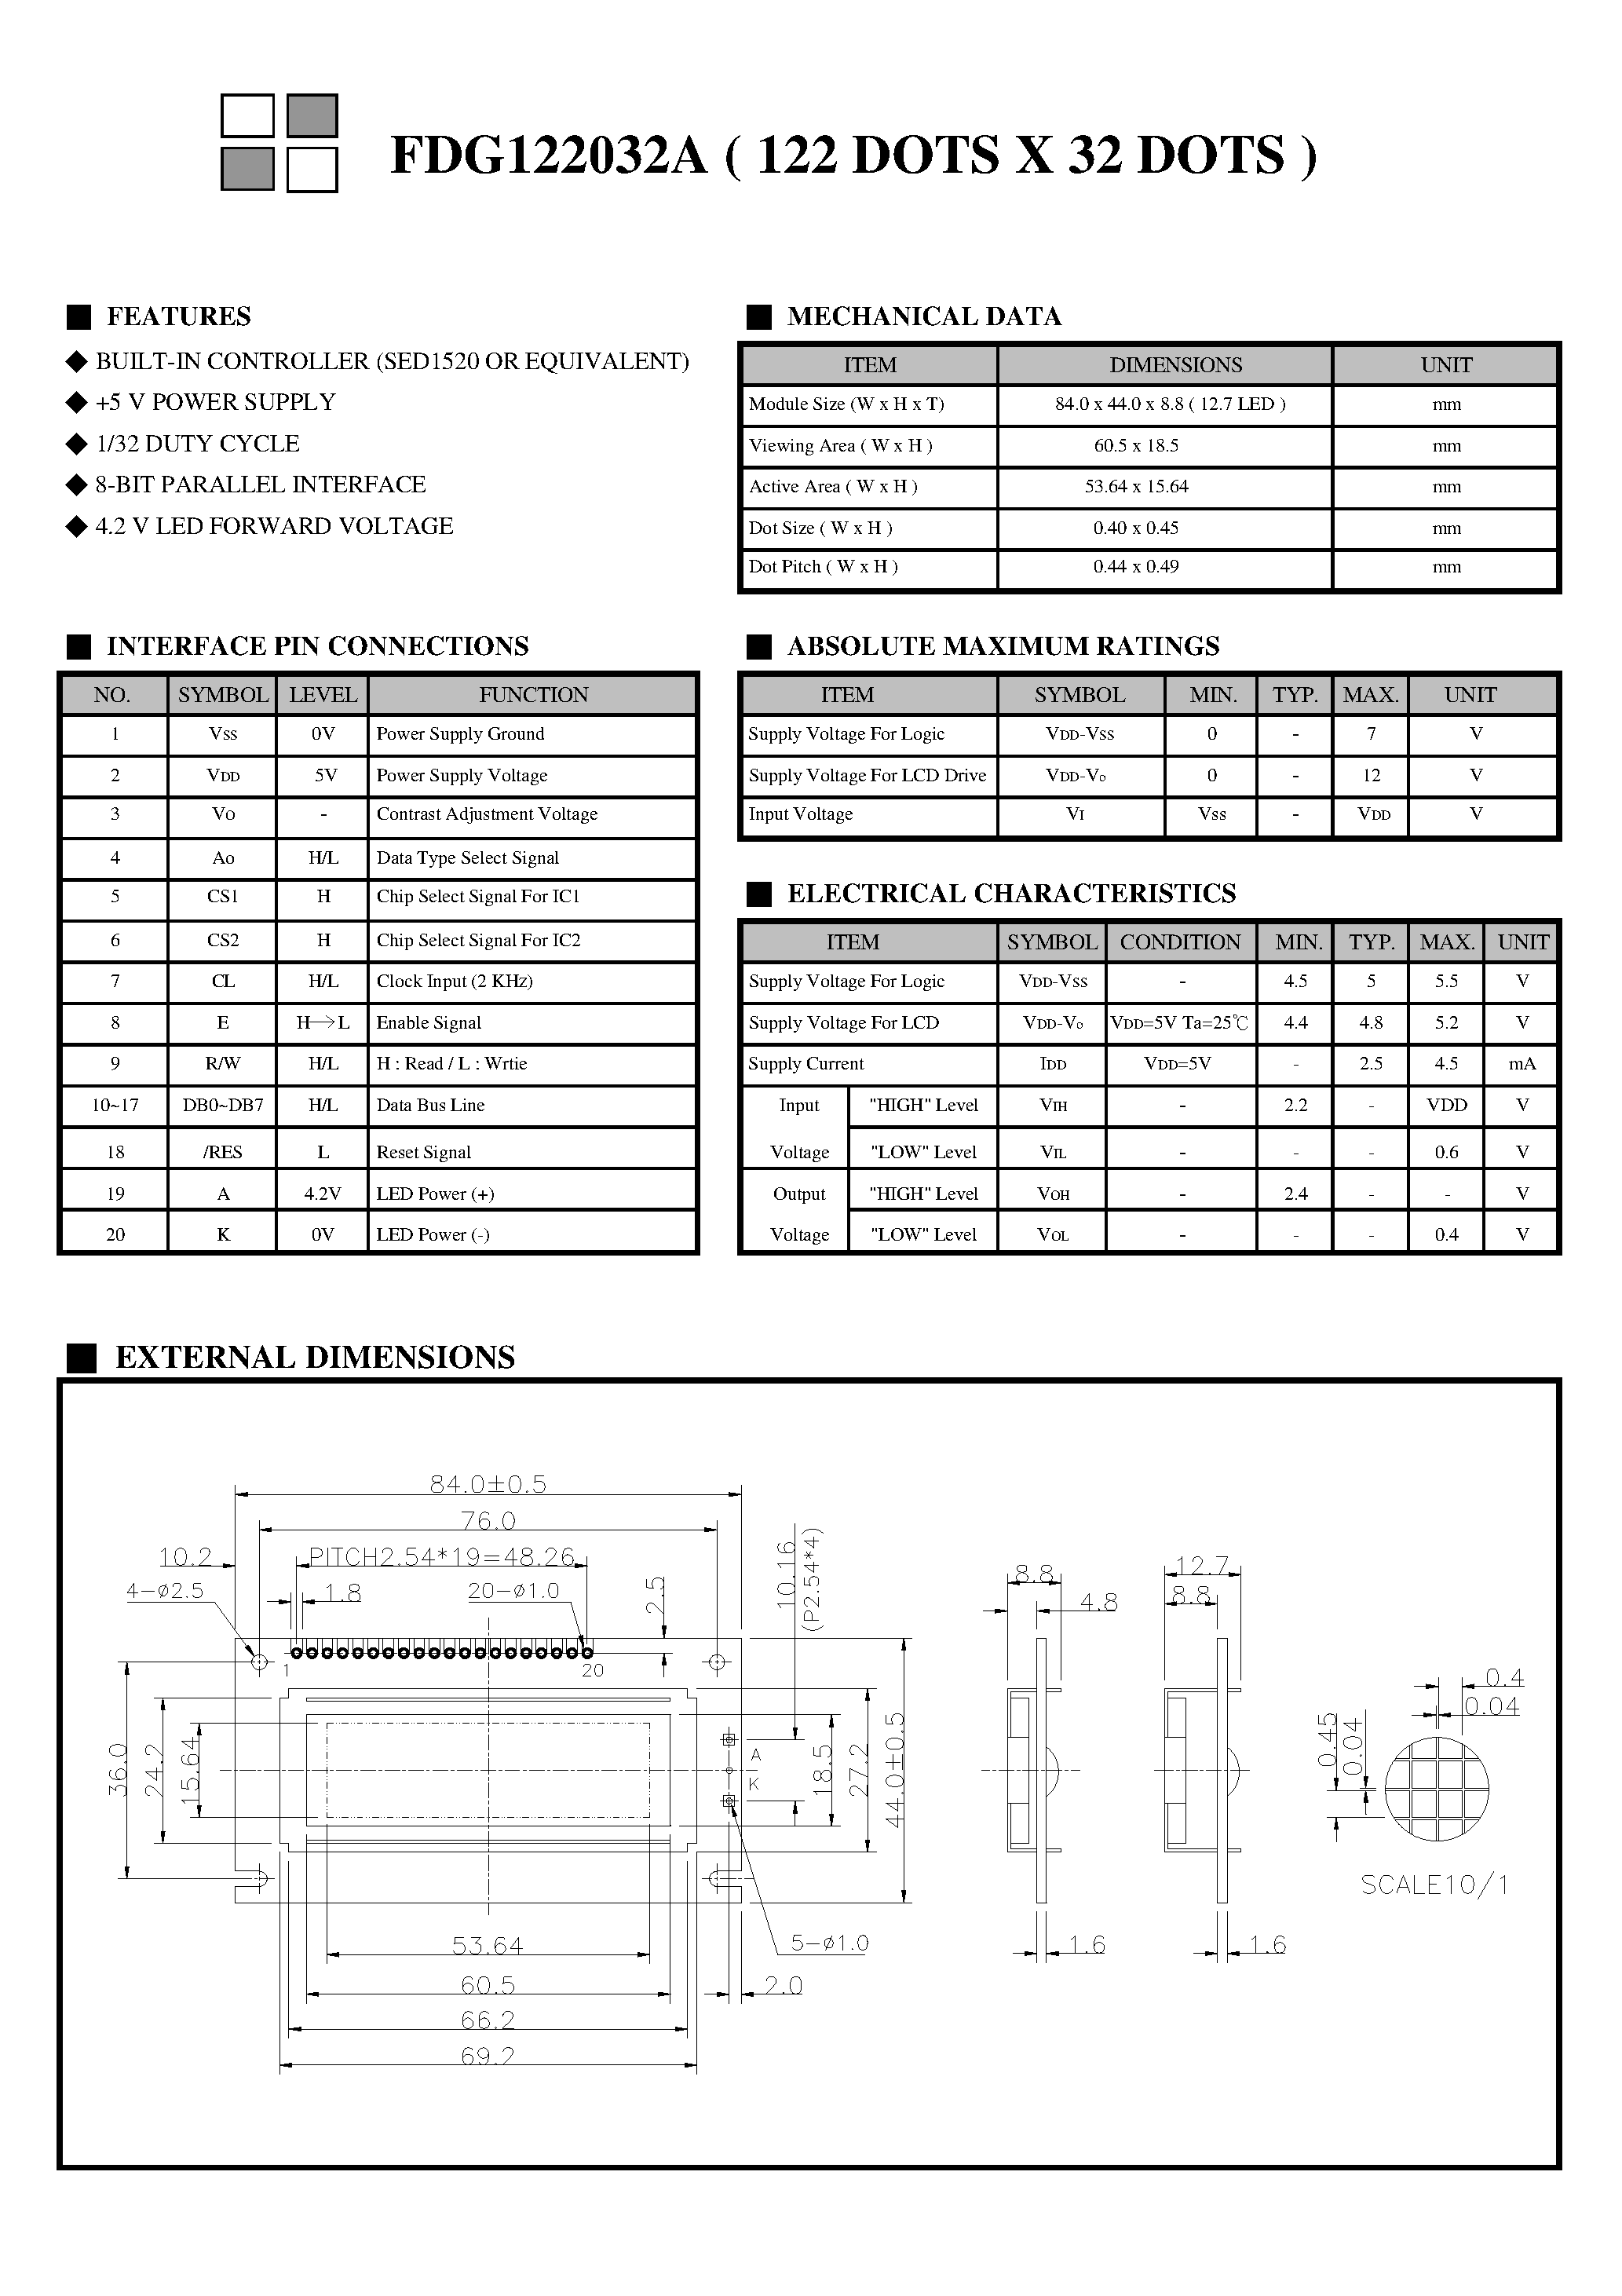 Datasheet FDG122032A - Monochrome Lcd Module page 2